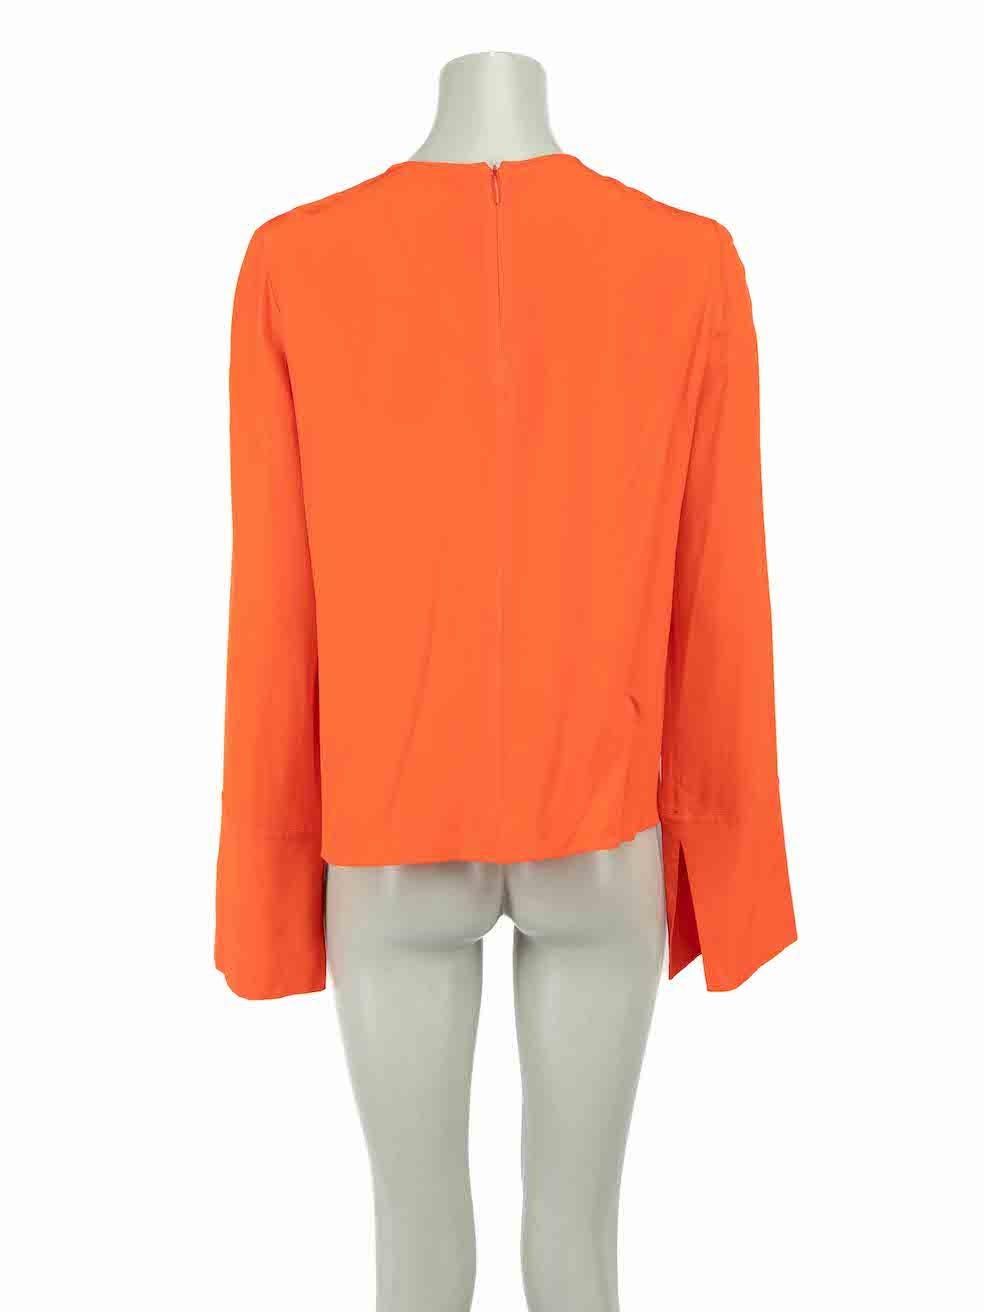 Emilio Pucci Orange Silk Draped Blouse Size S In Good Condition For Sale In London, GB